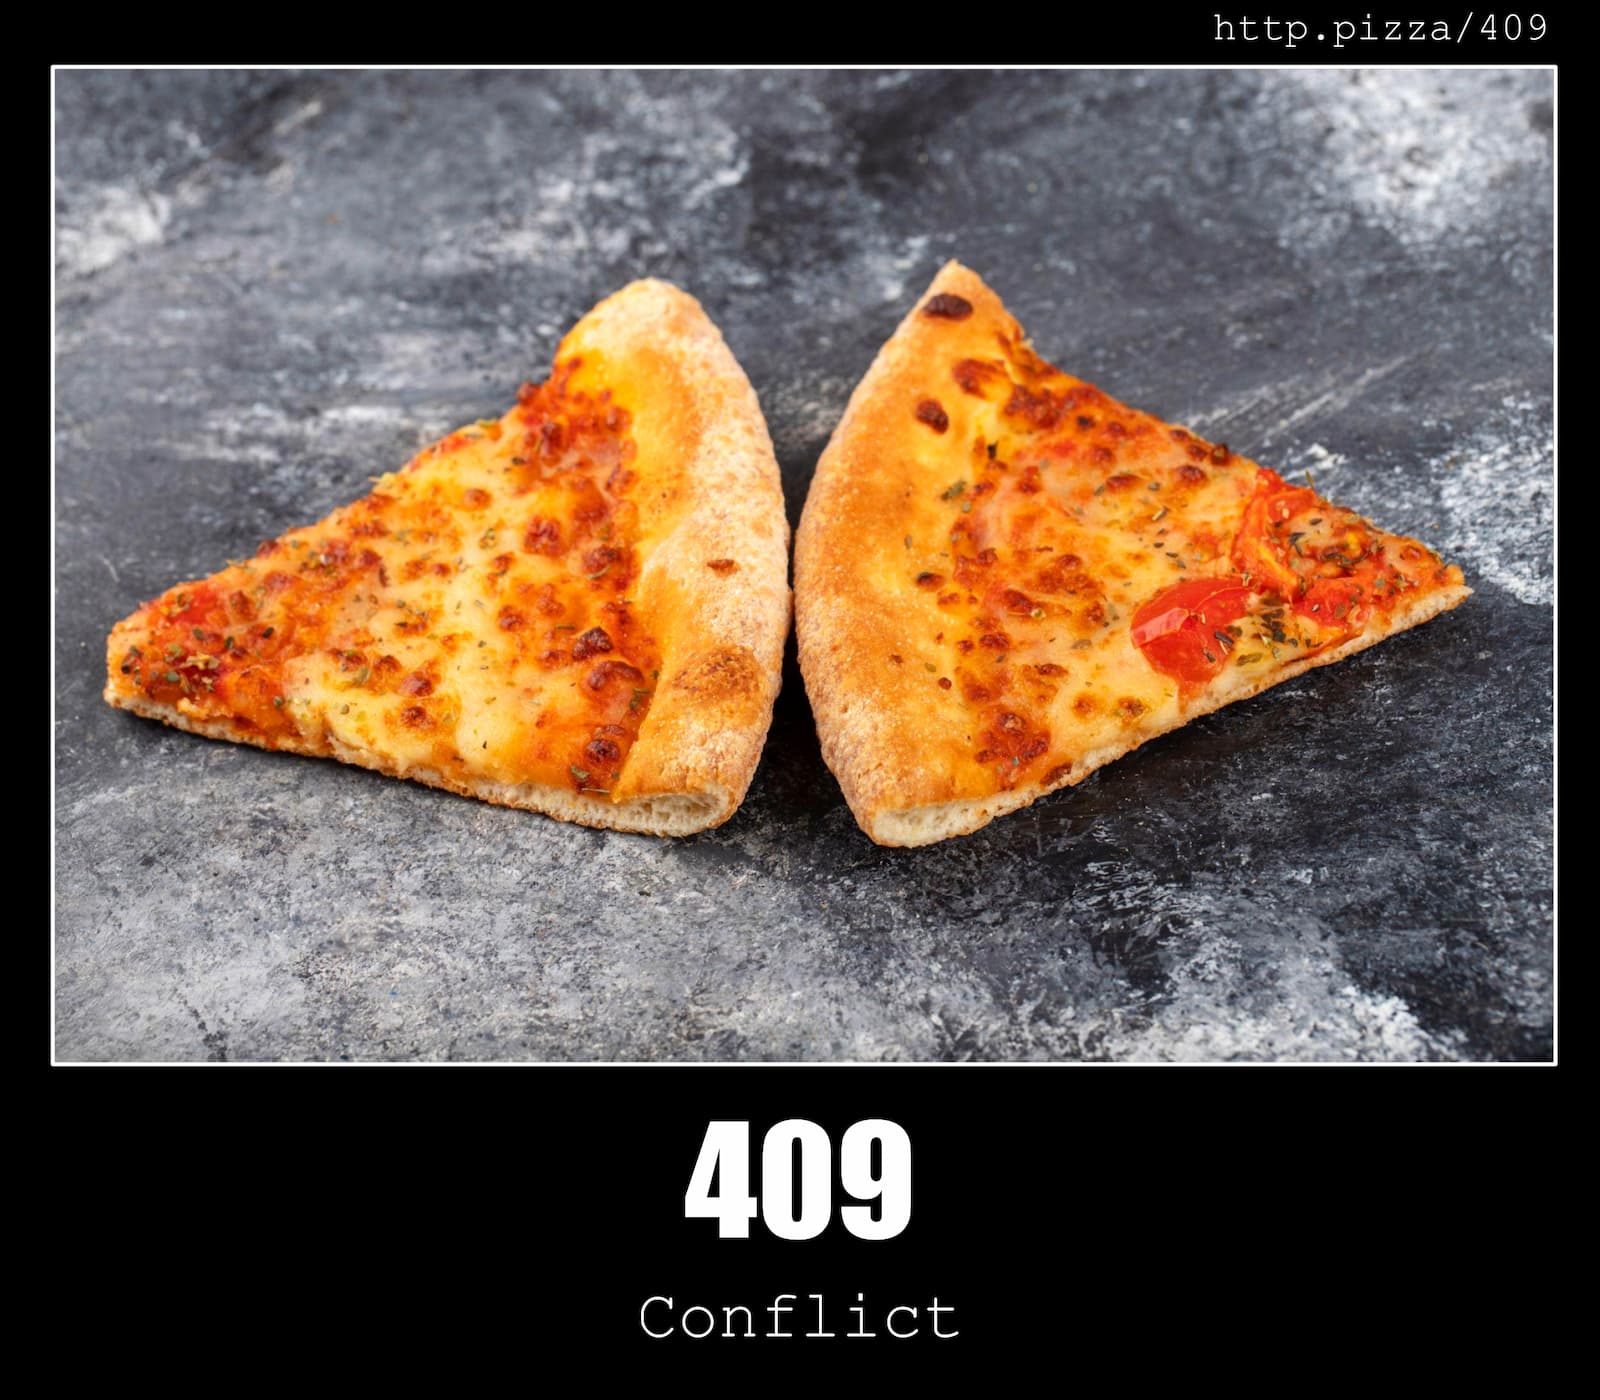 HTTP Status Code 409 Conflict & Pizzas